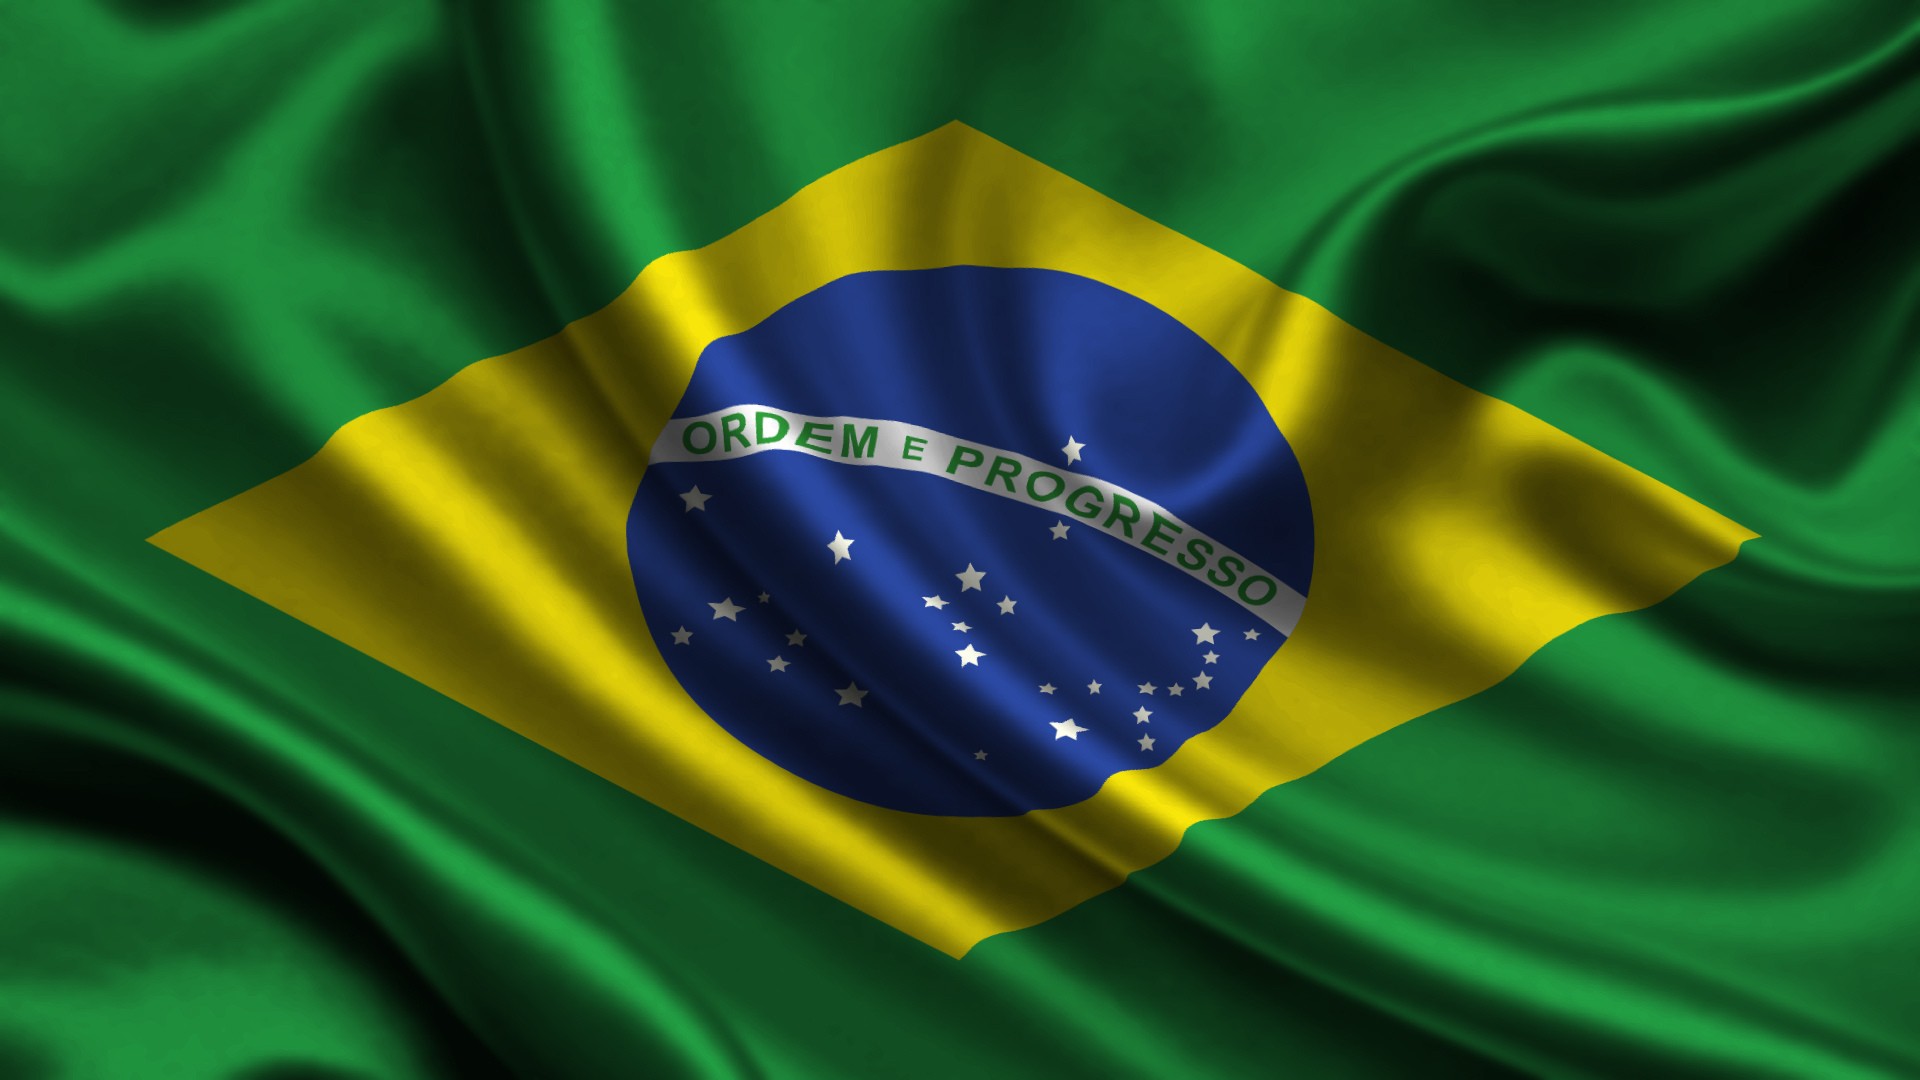 General 1920x1080 Brazil flag blue yellow green